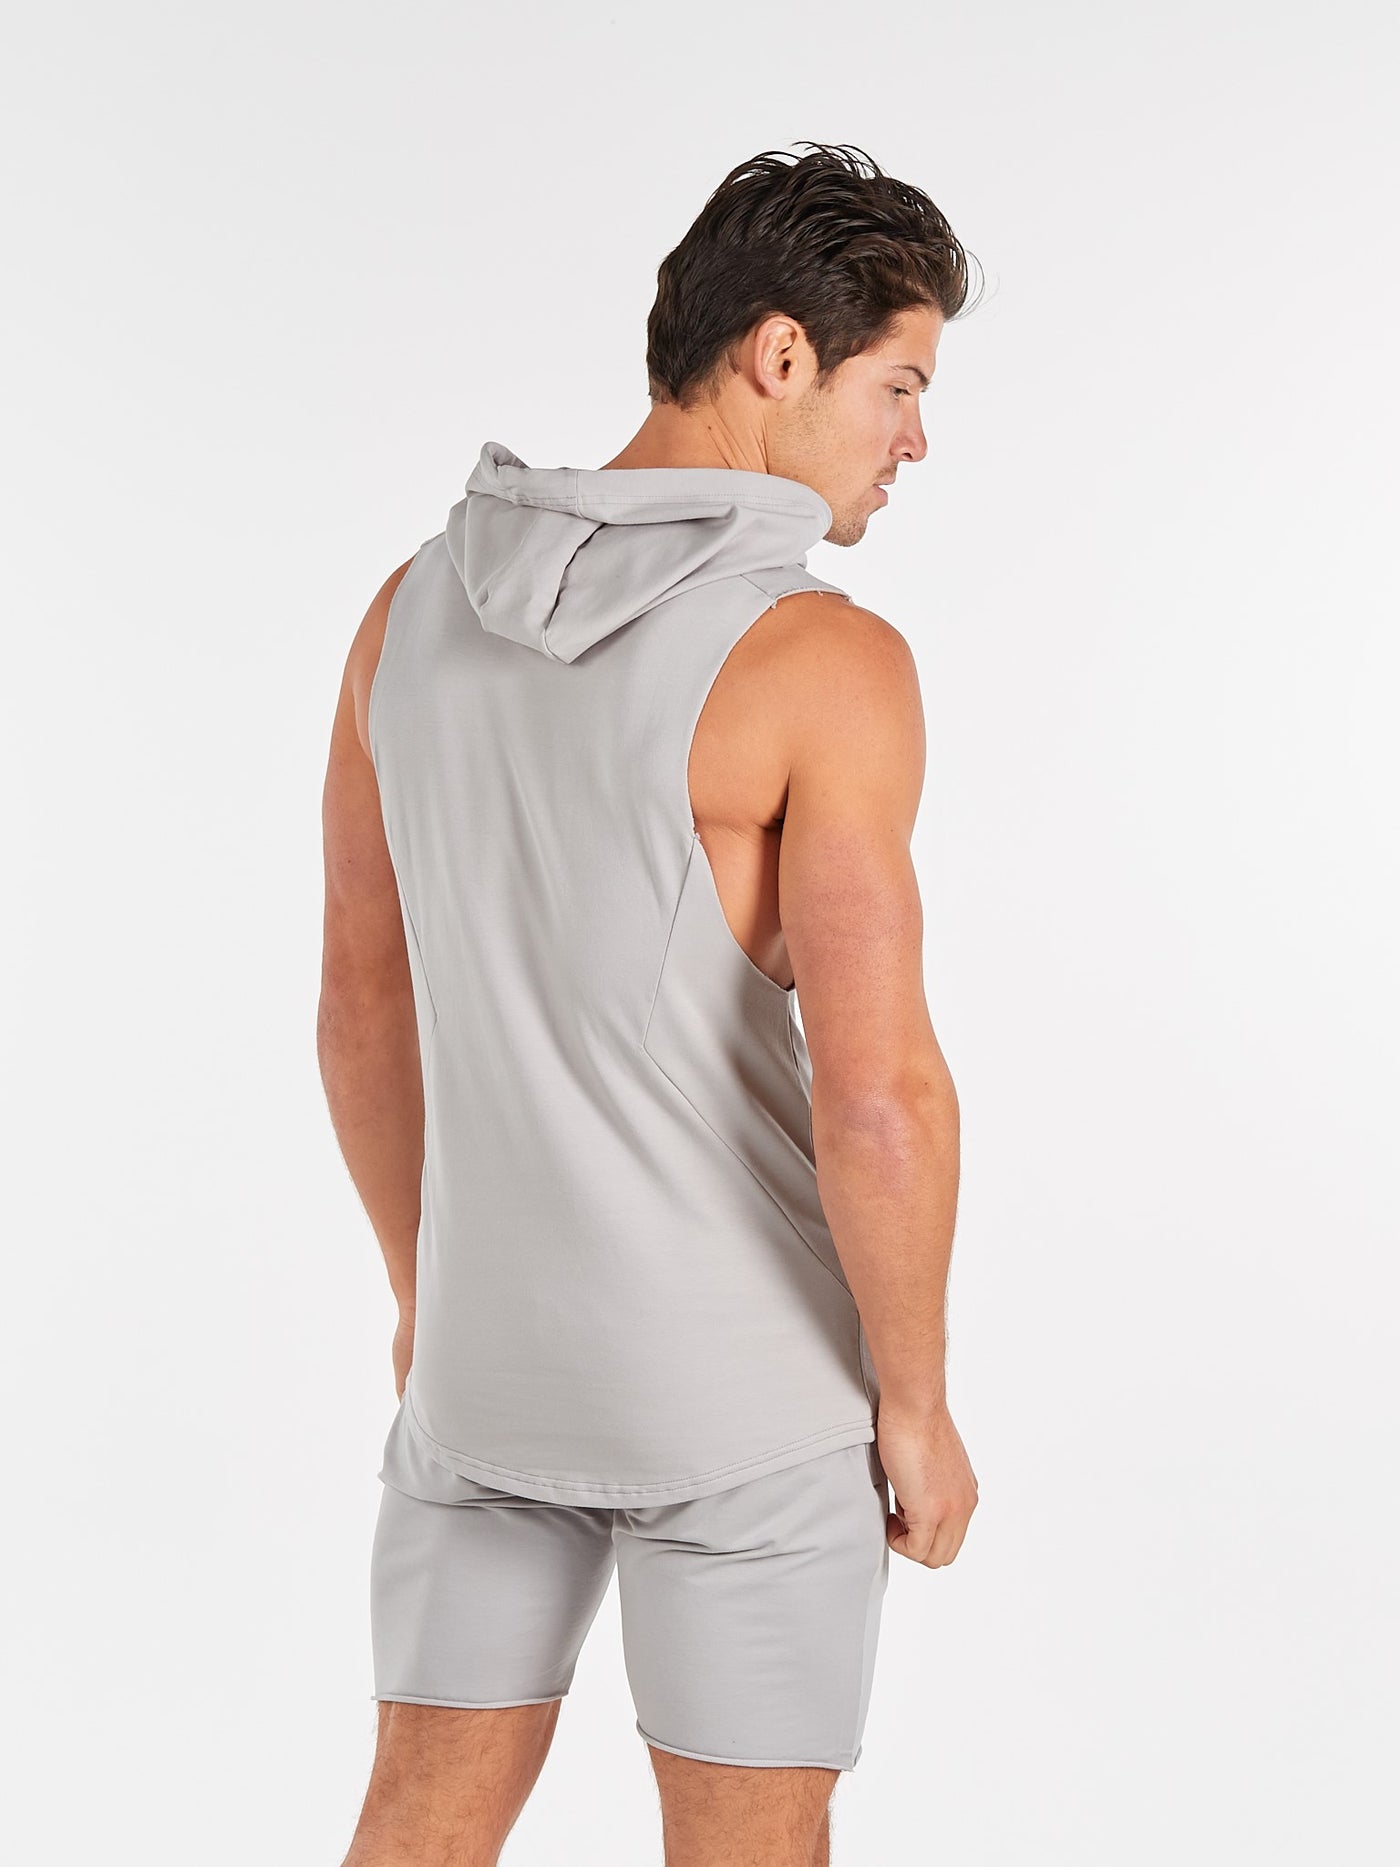 PHYSIQ APPAREL Agile Sleeveless Top Men  Hoodie PMHD 103 Mist Grey - Activemen Clothing